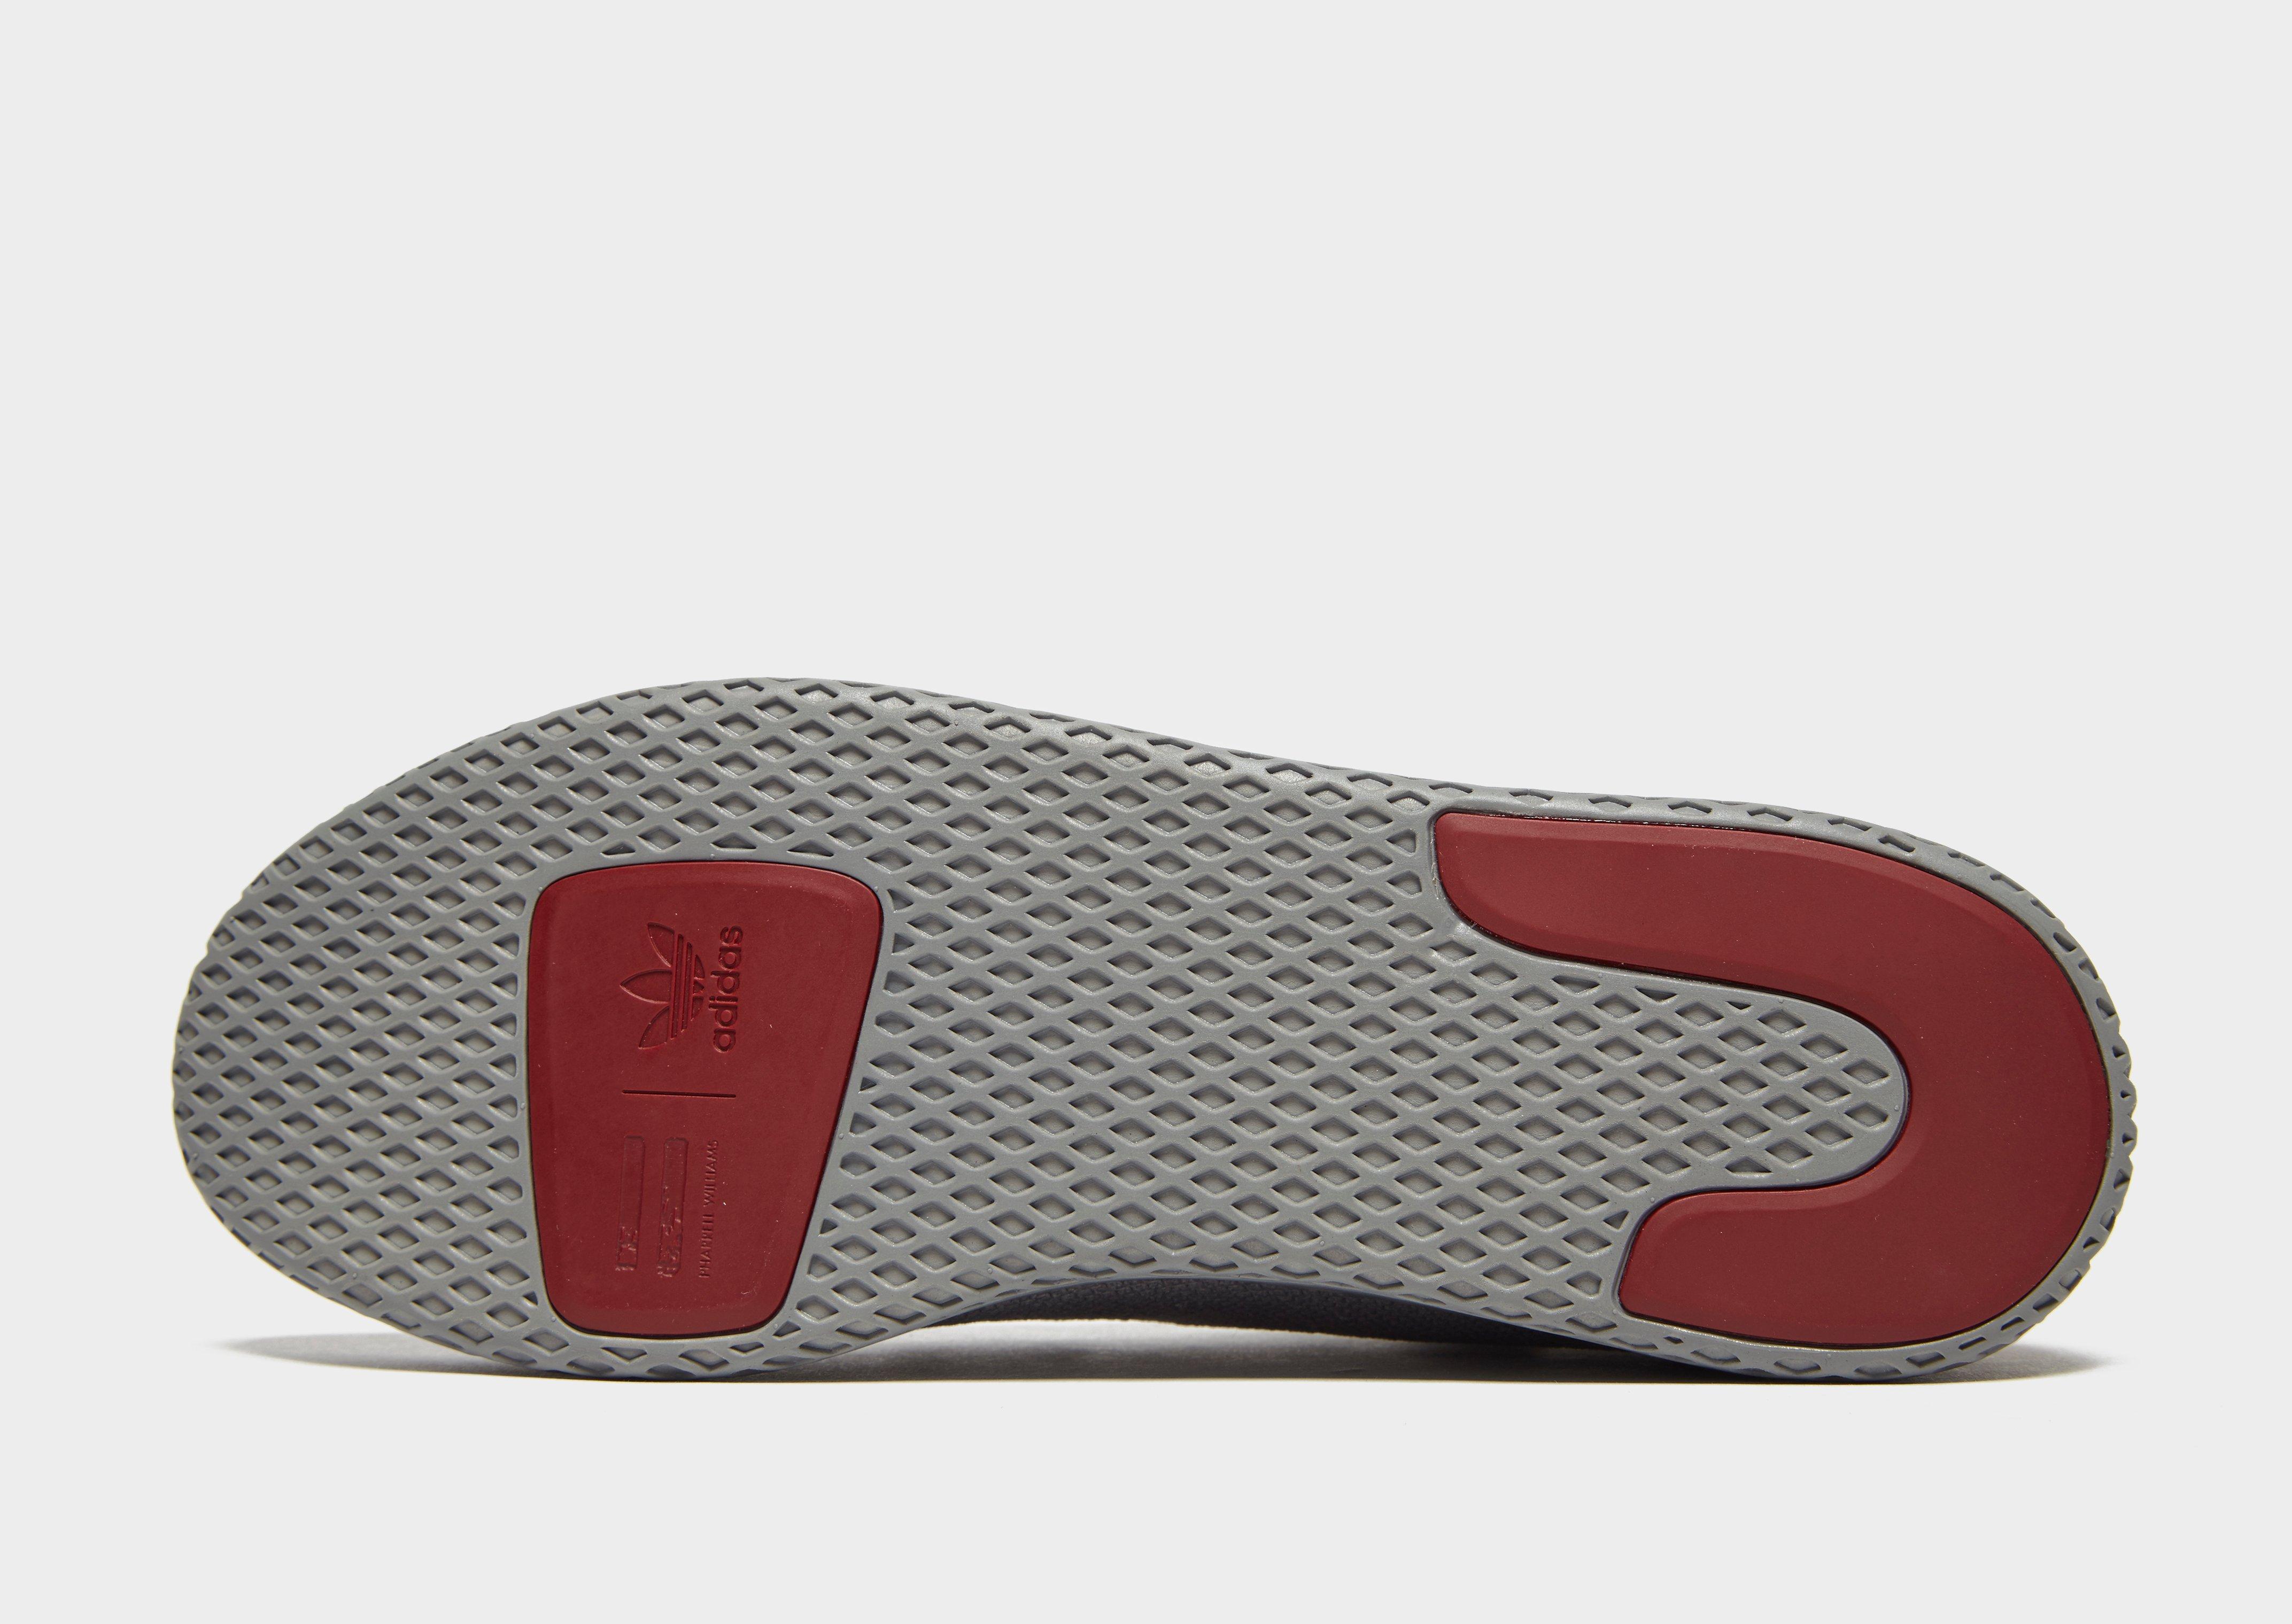 adidas originals x pharrell williams tennis hu grey and red